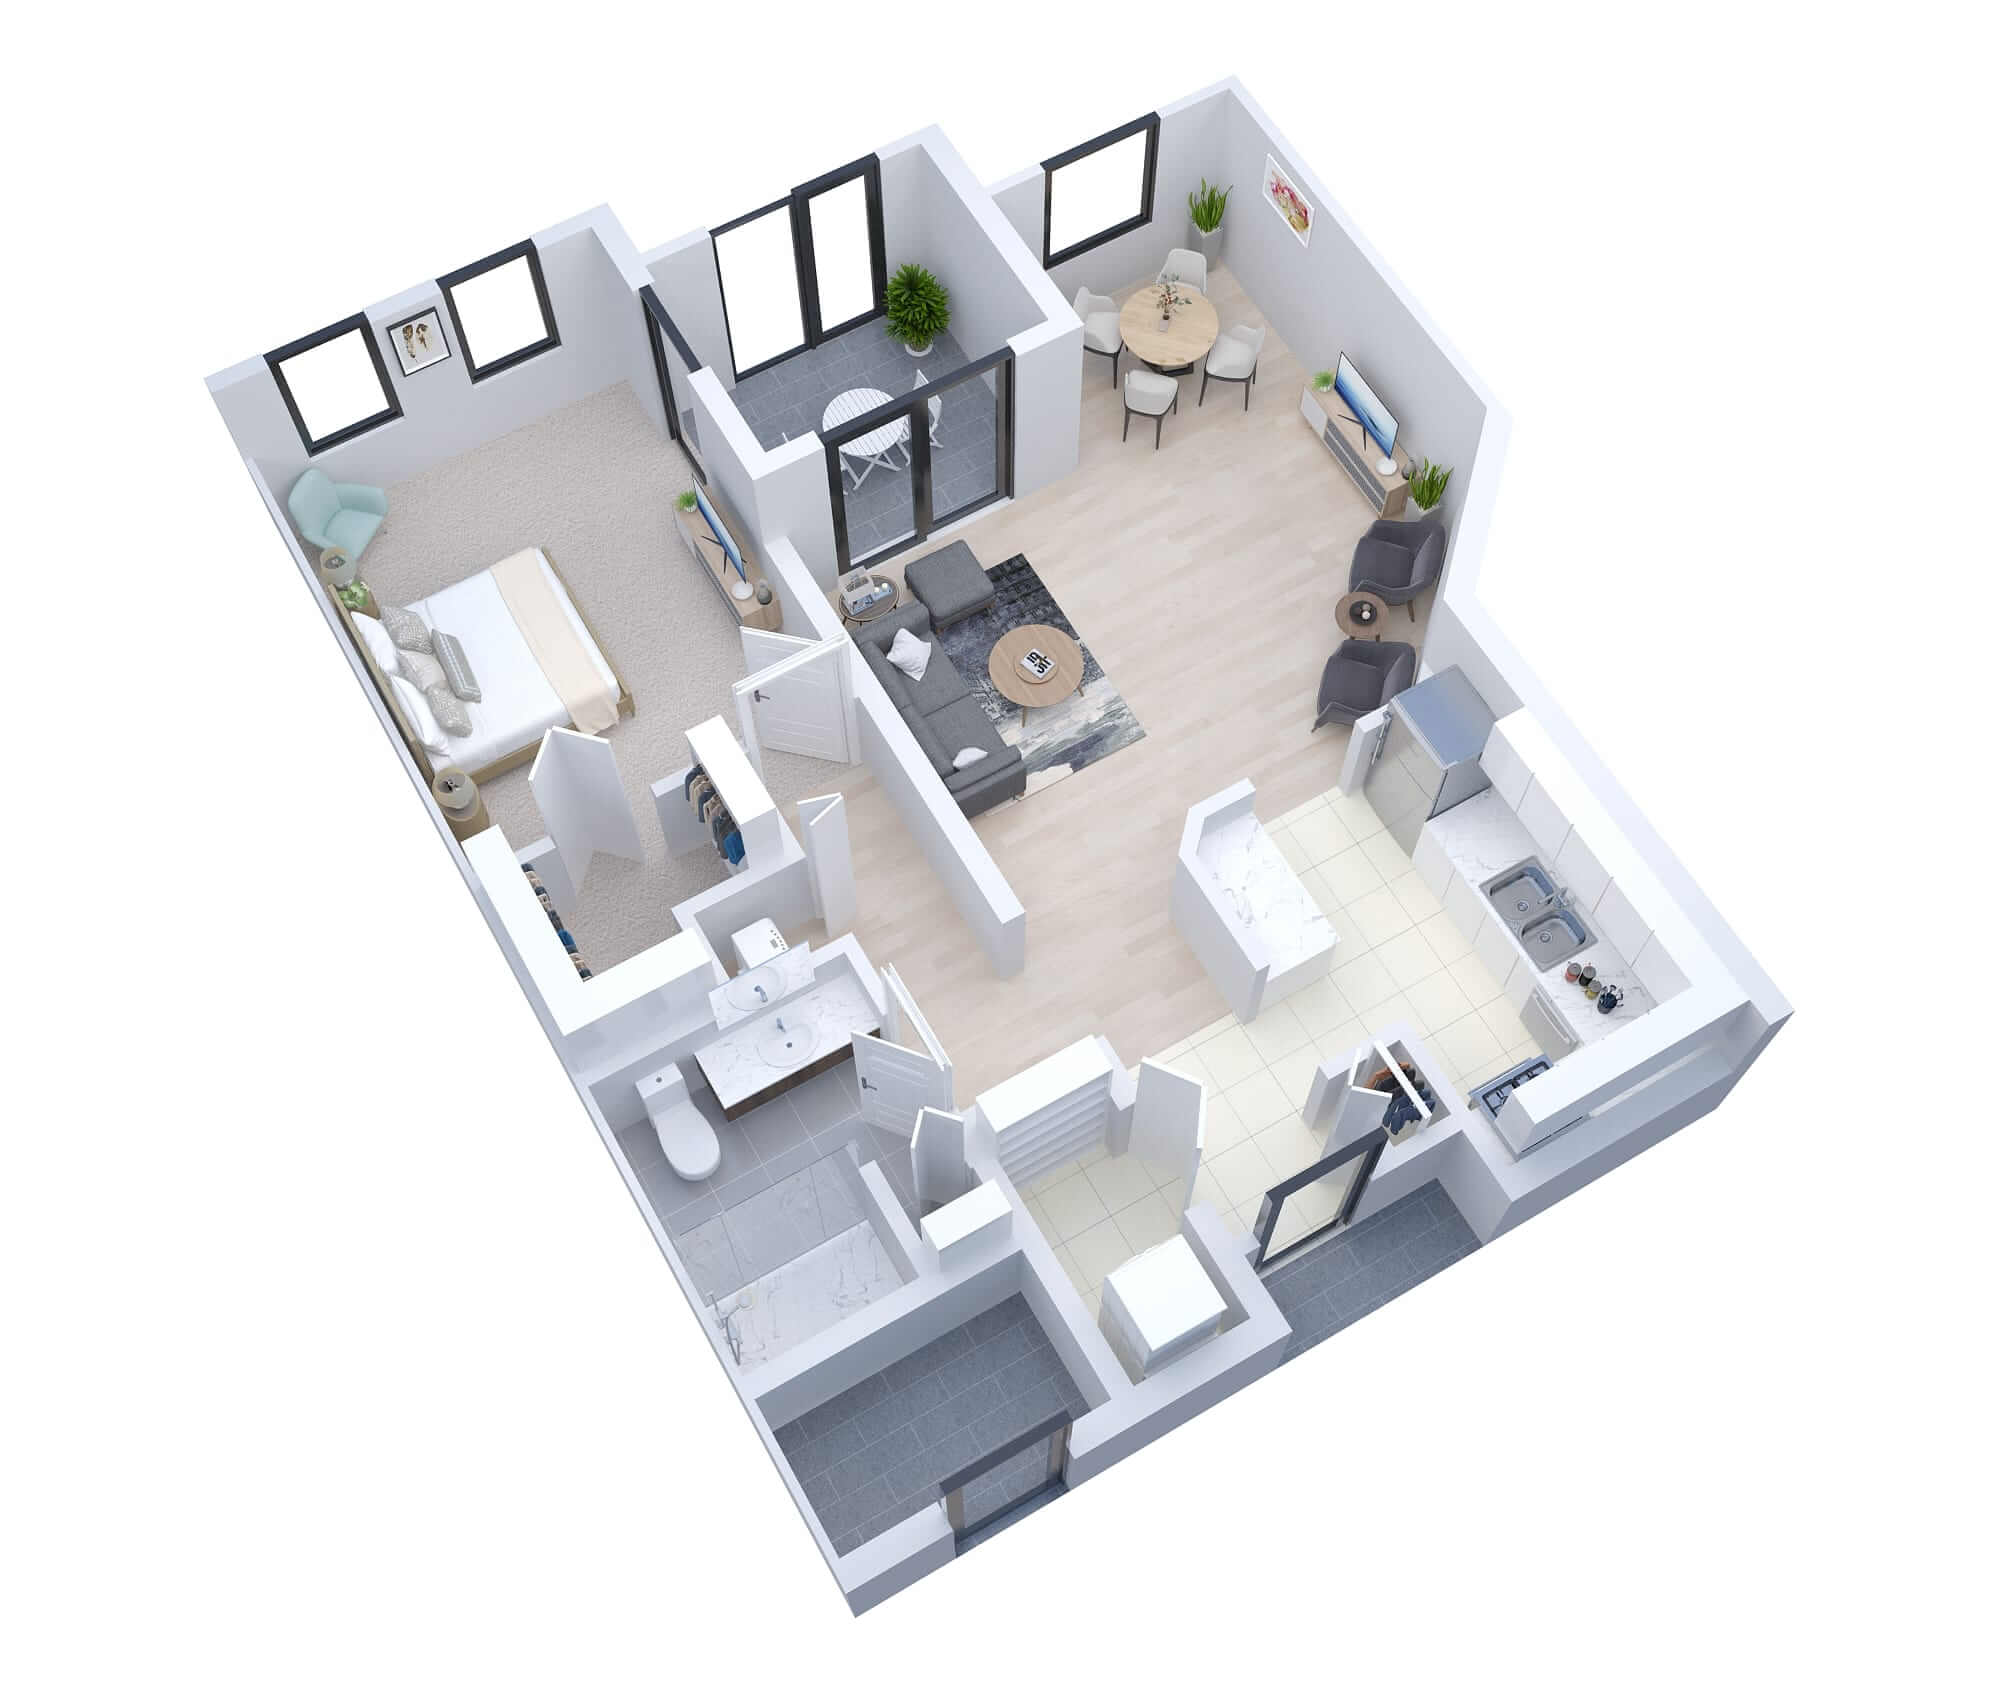 Andover - senior living floor plan